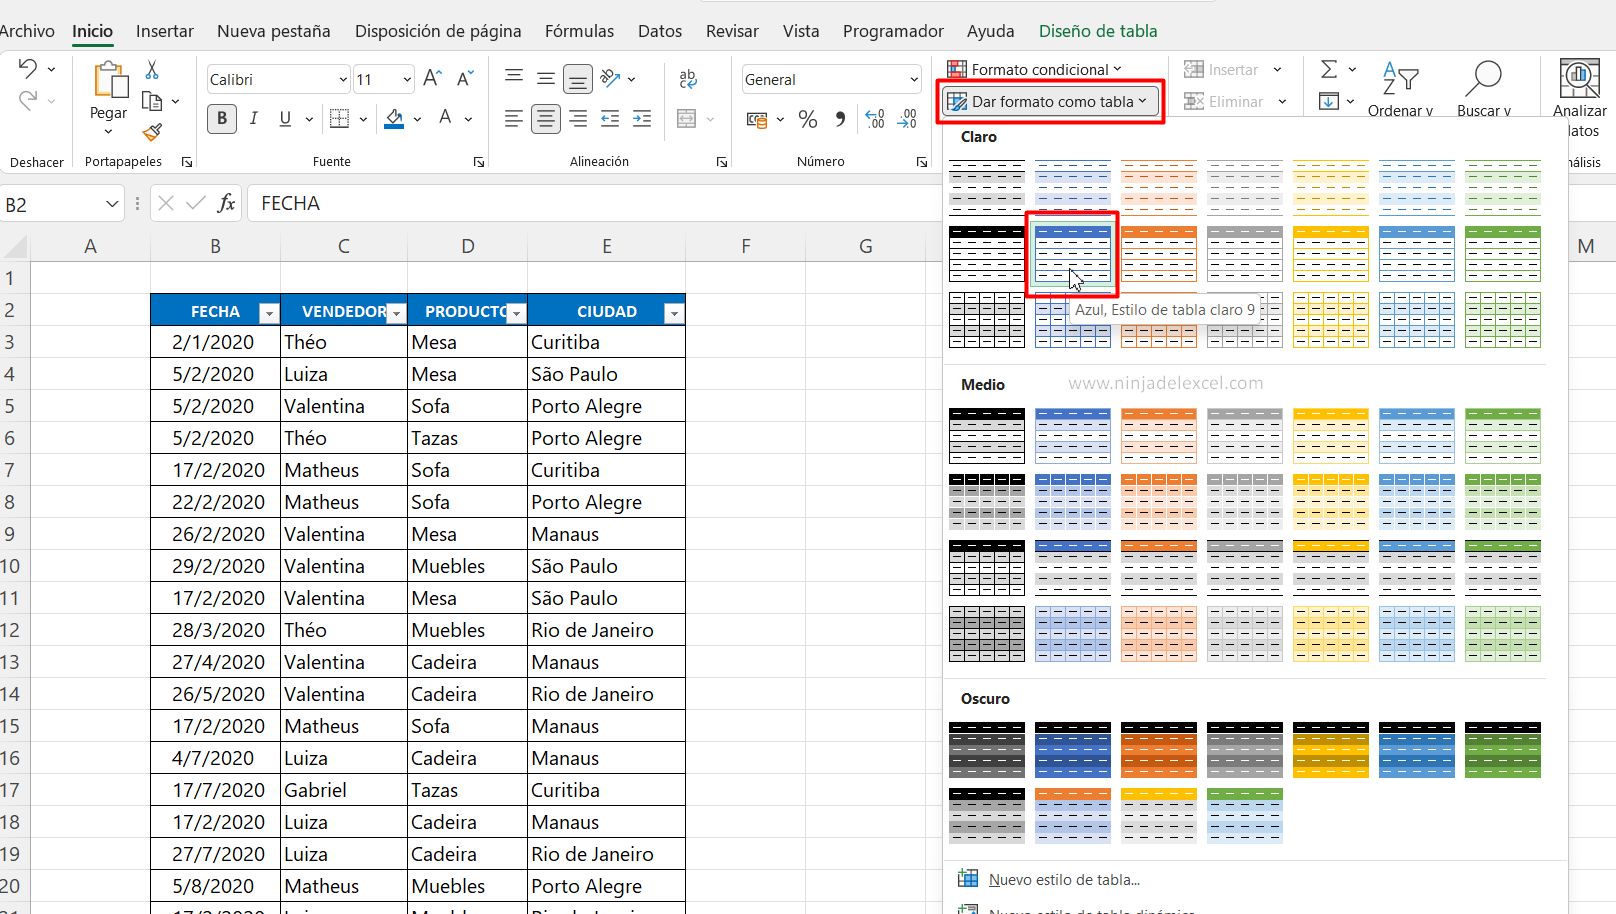 Exportar una Tabla de Excel a SharePoint